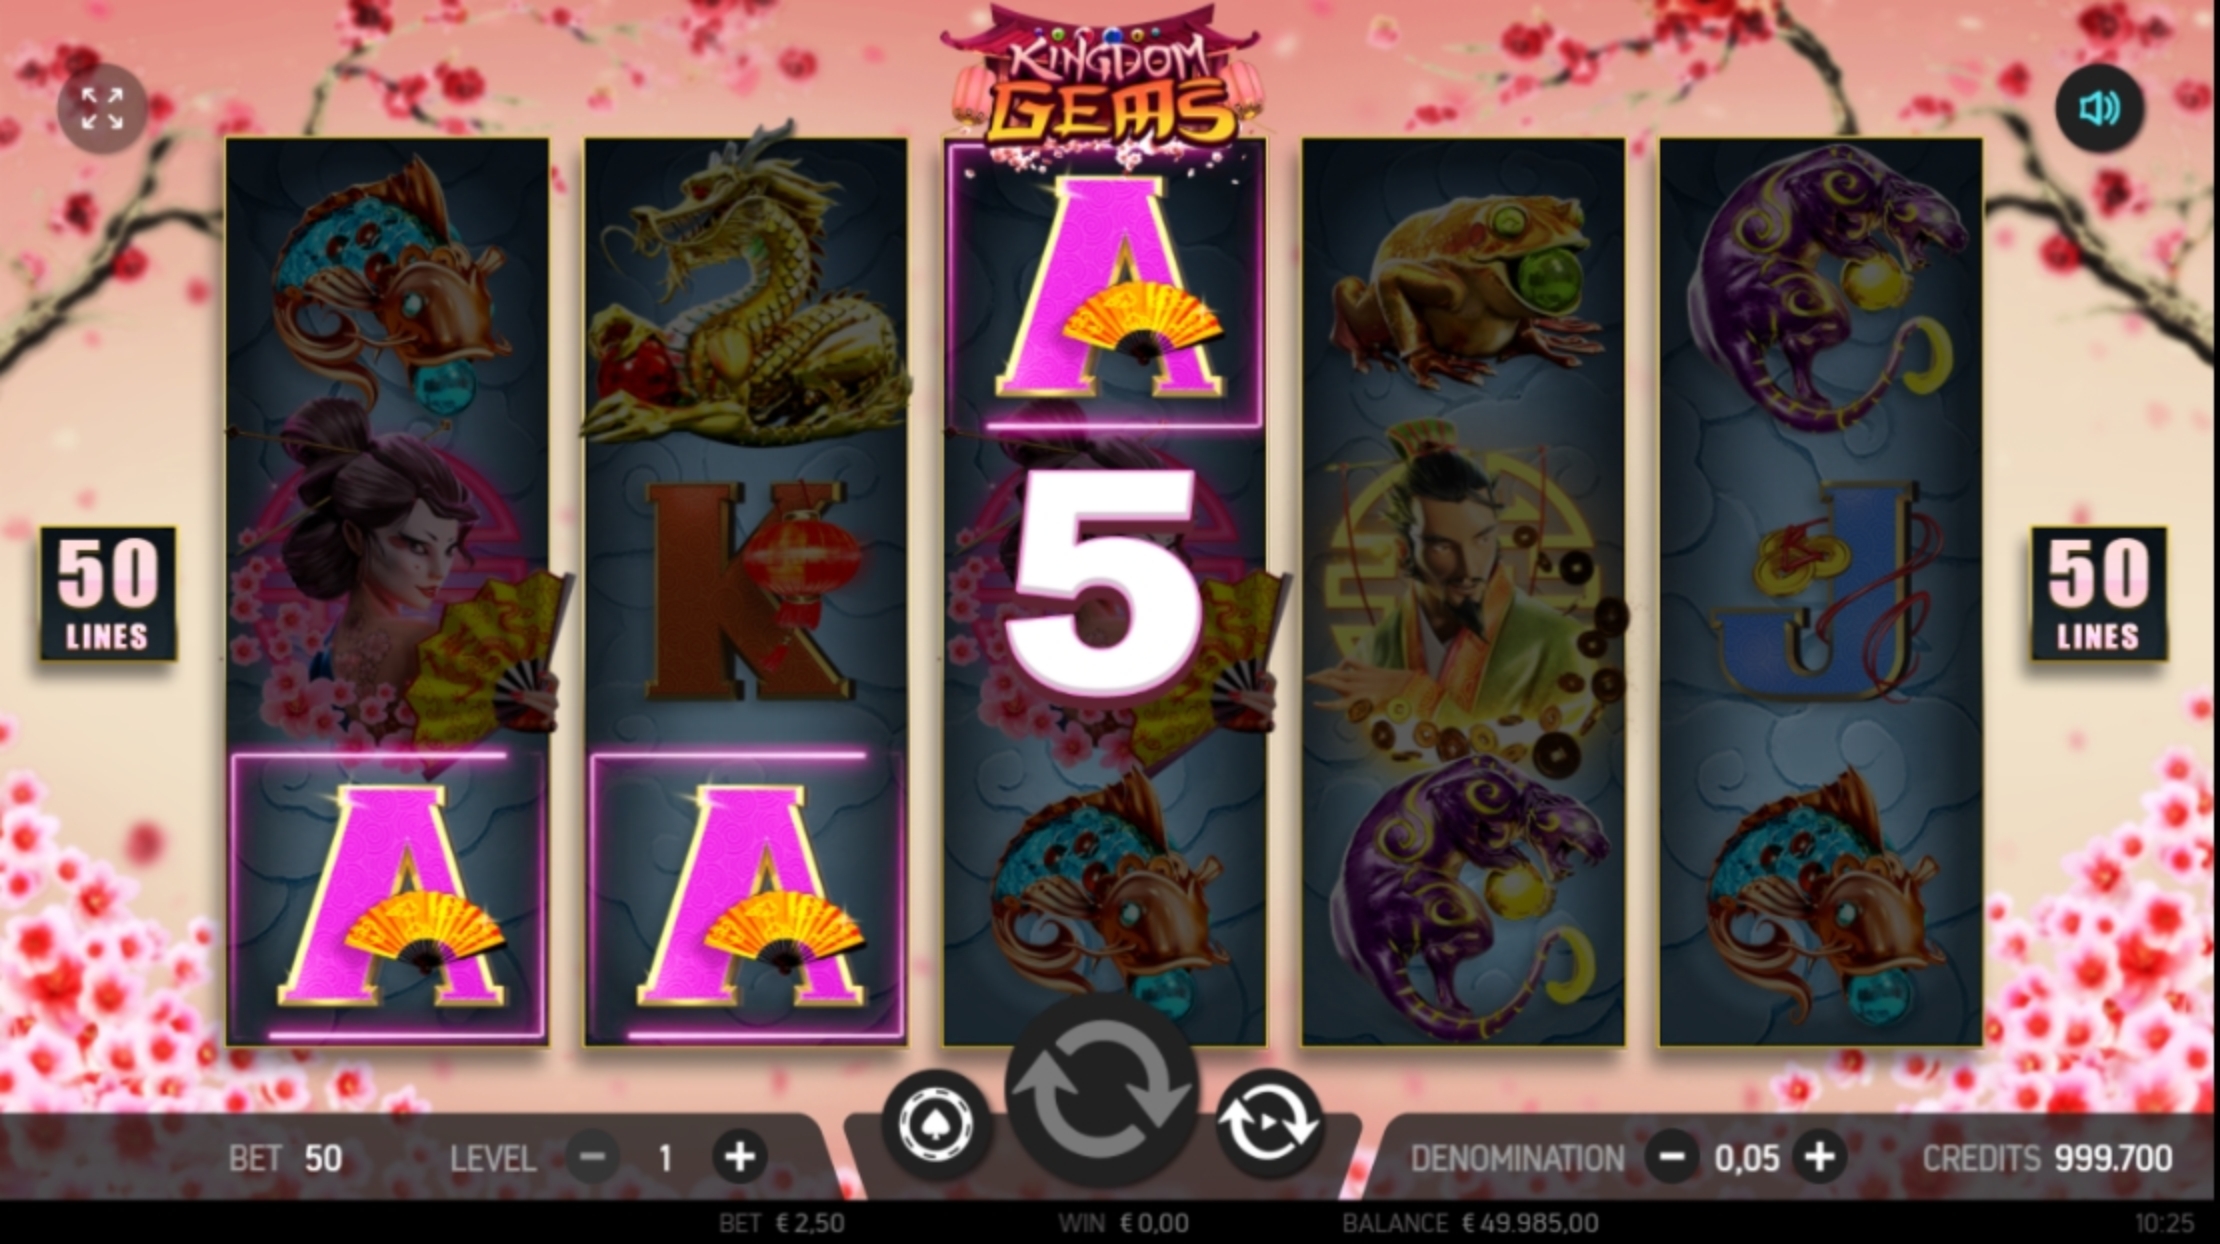 Win Money in Kingdom Gems Free Slot Game by FBM